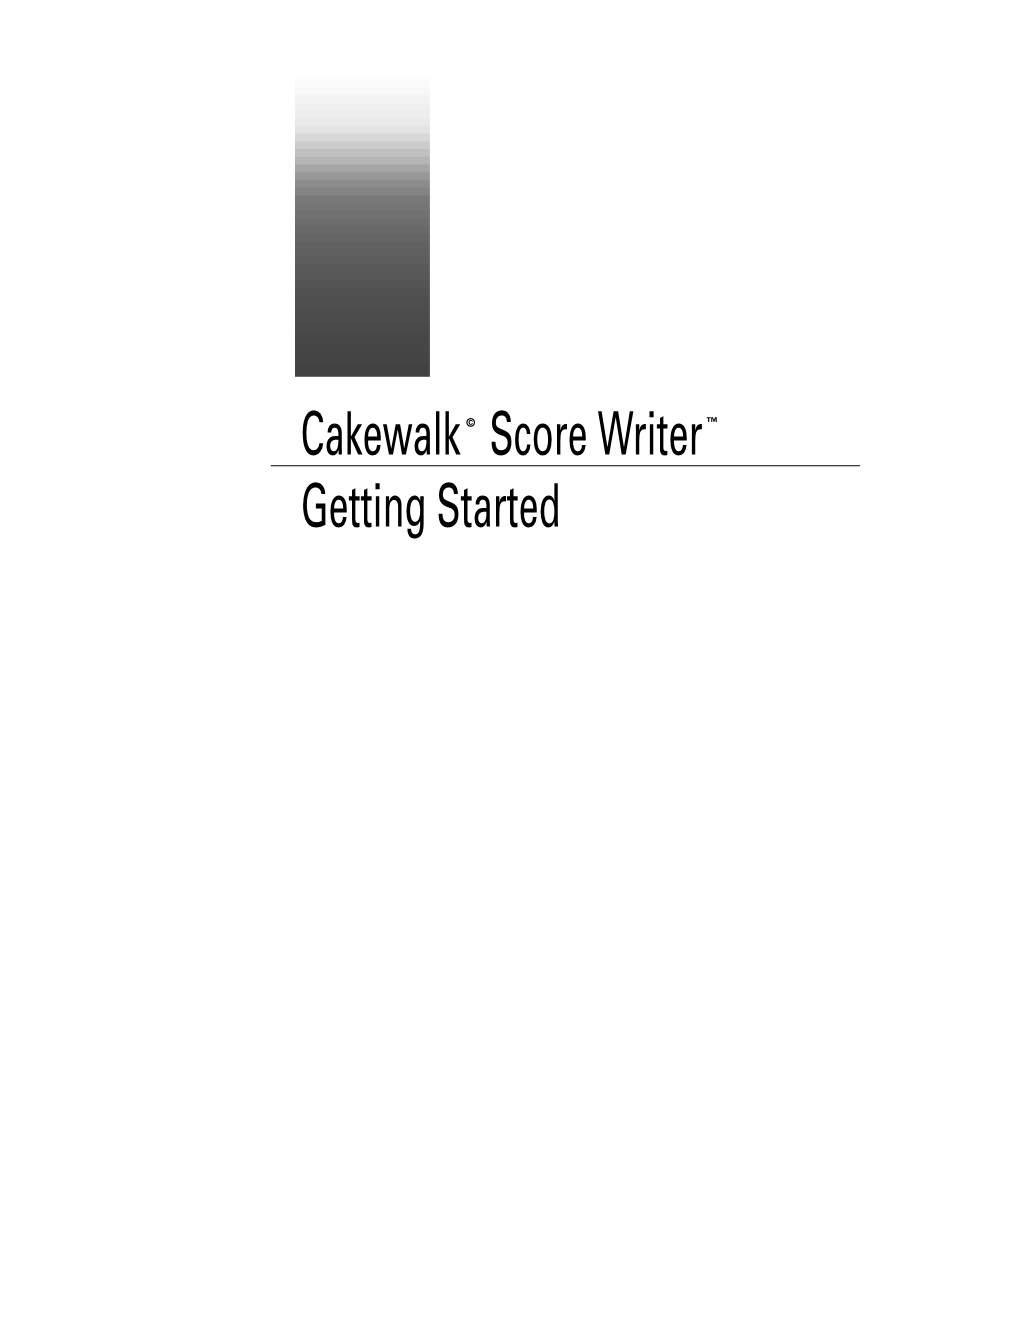 Cakewalk Score Writer Getting Started